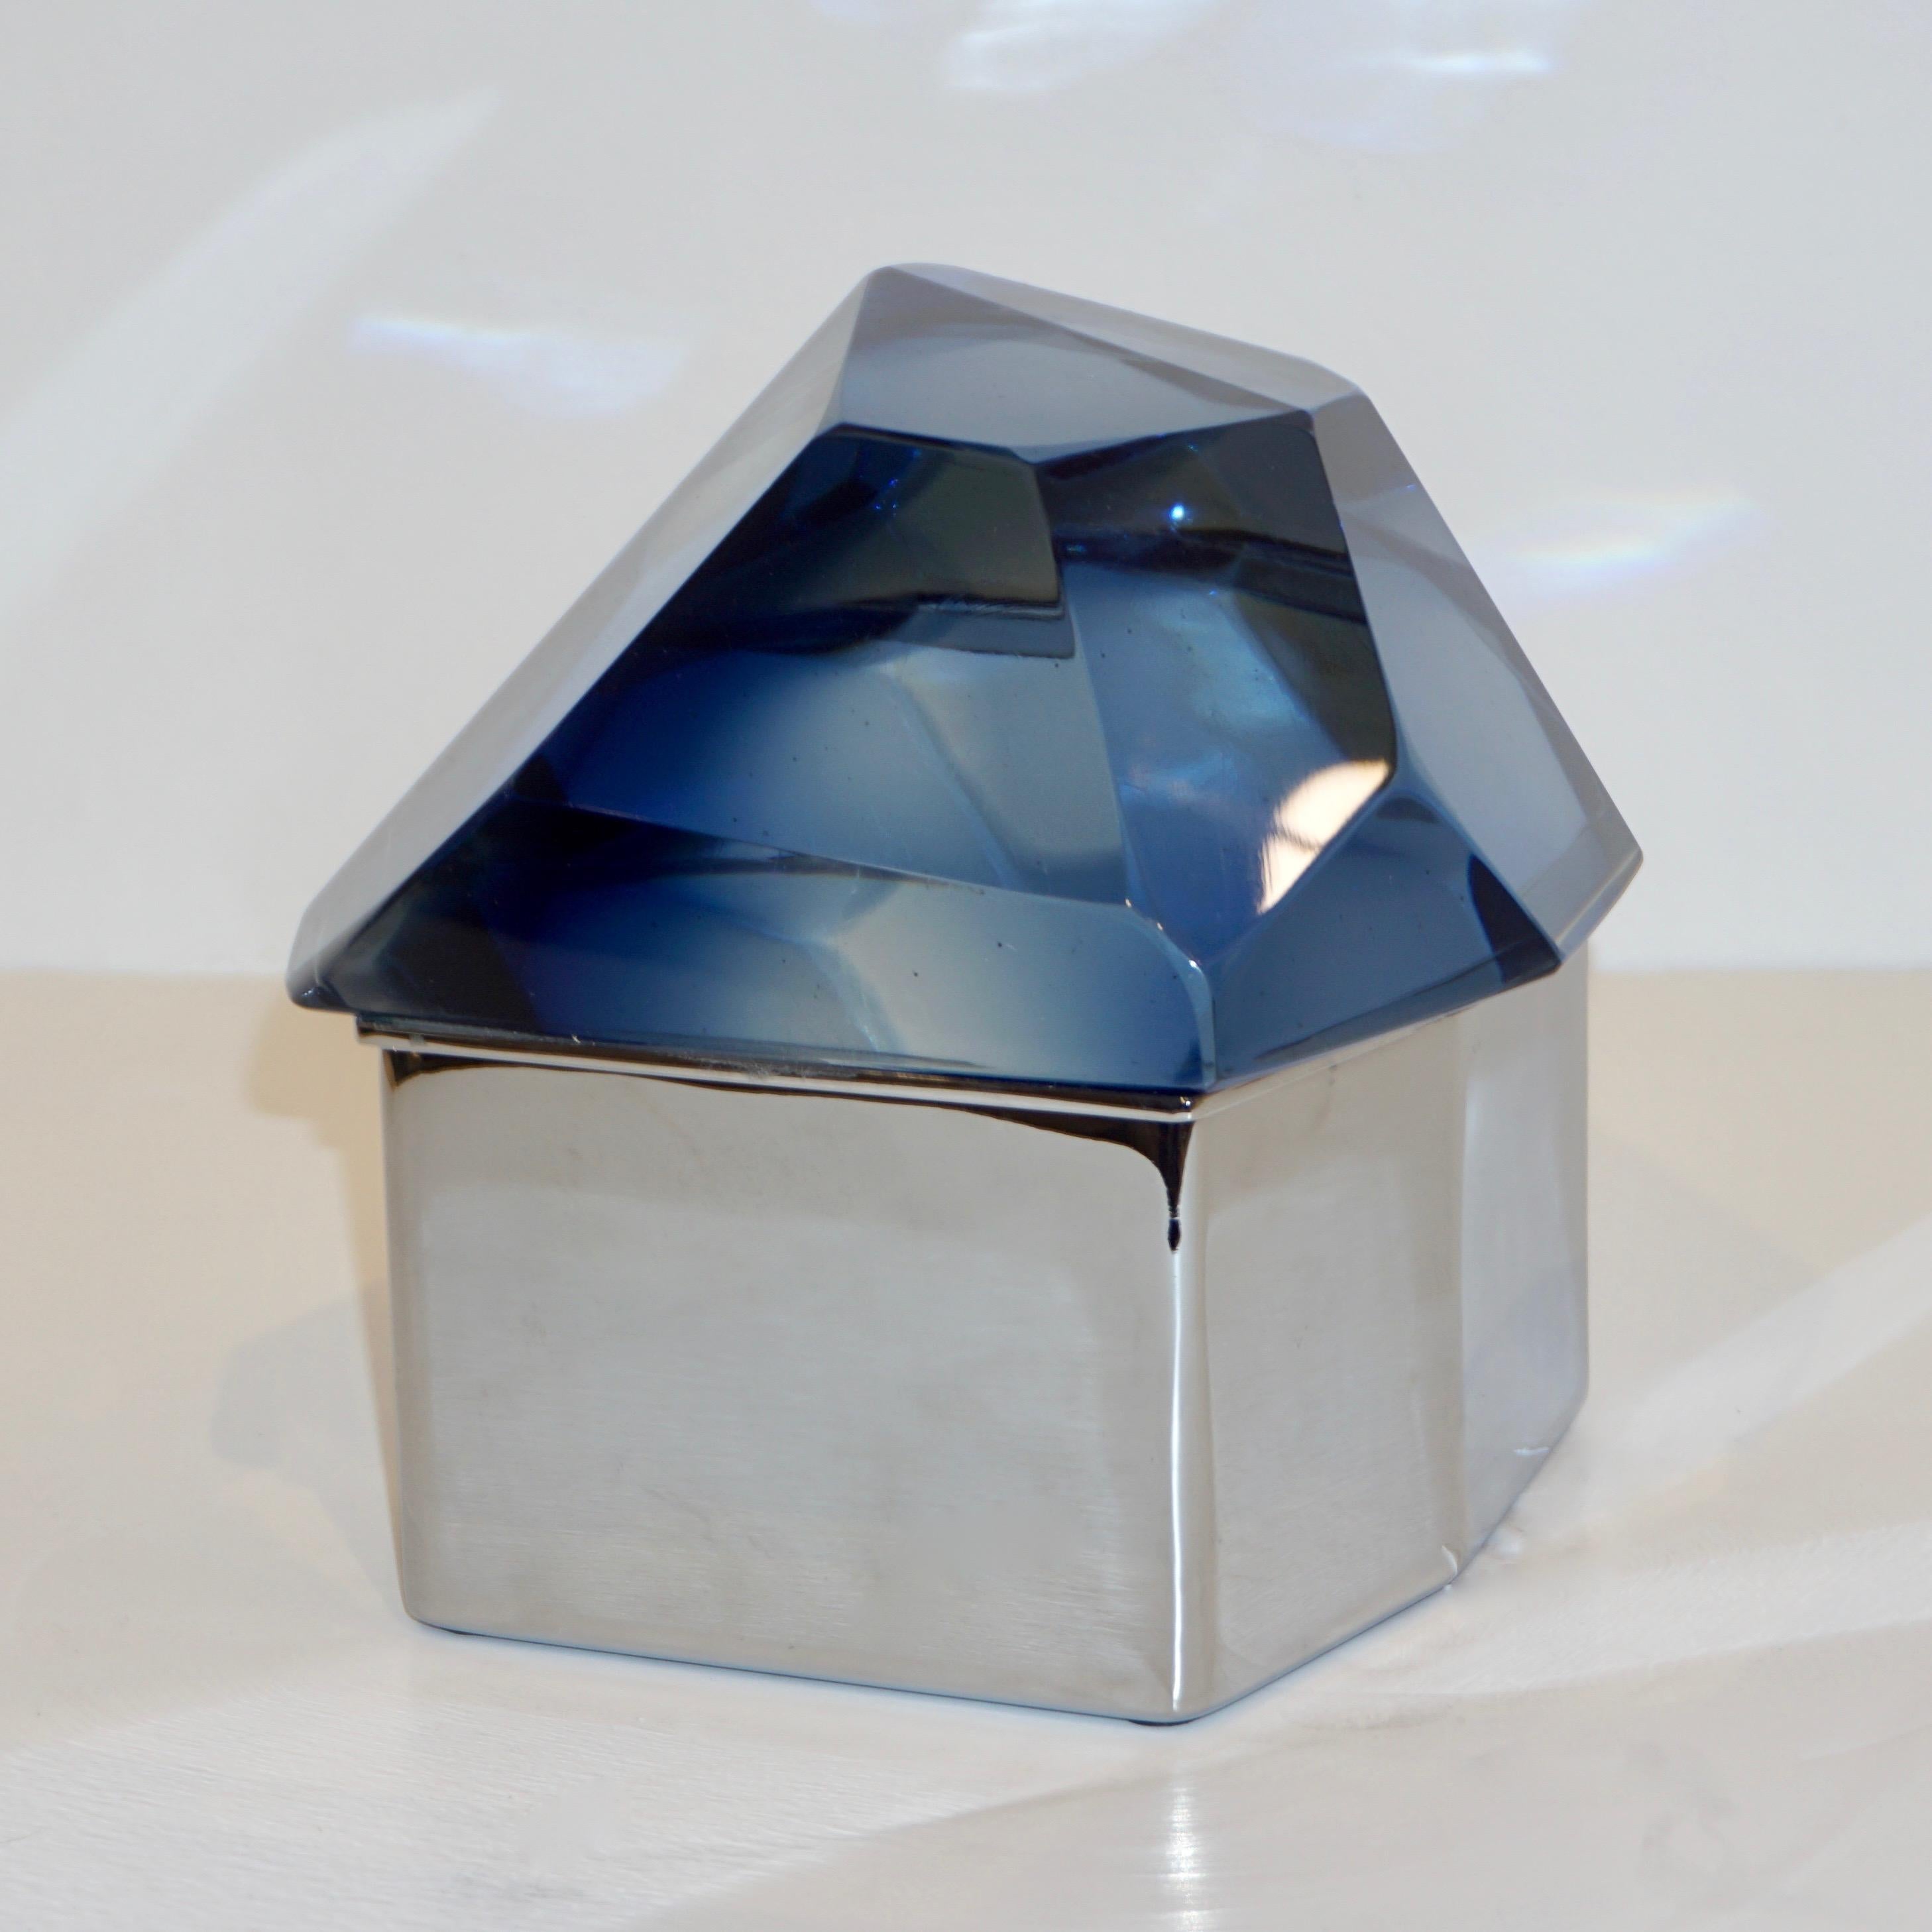 Art Glass Toso Italian Modern Diamond-Shaped Murano Glass Blue and Nickel Jewel-Like Box